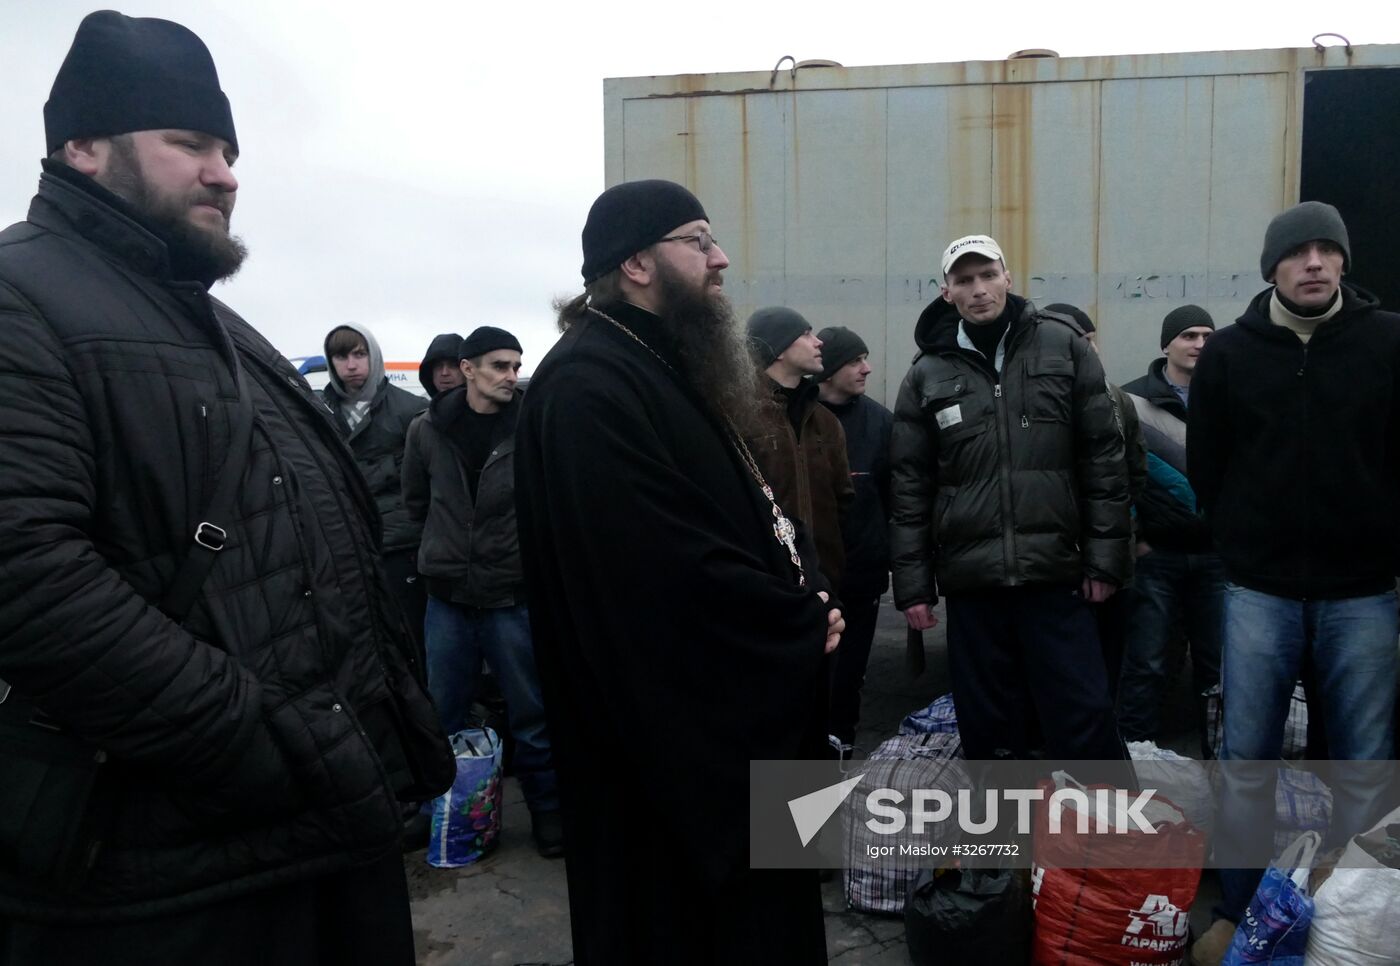 DPR-Ukraine prisoner-of-war swap in Donetsk region